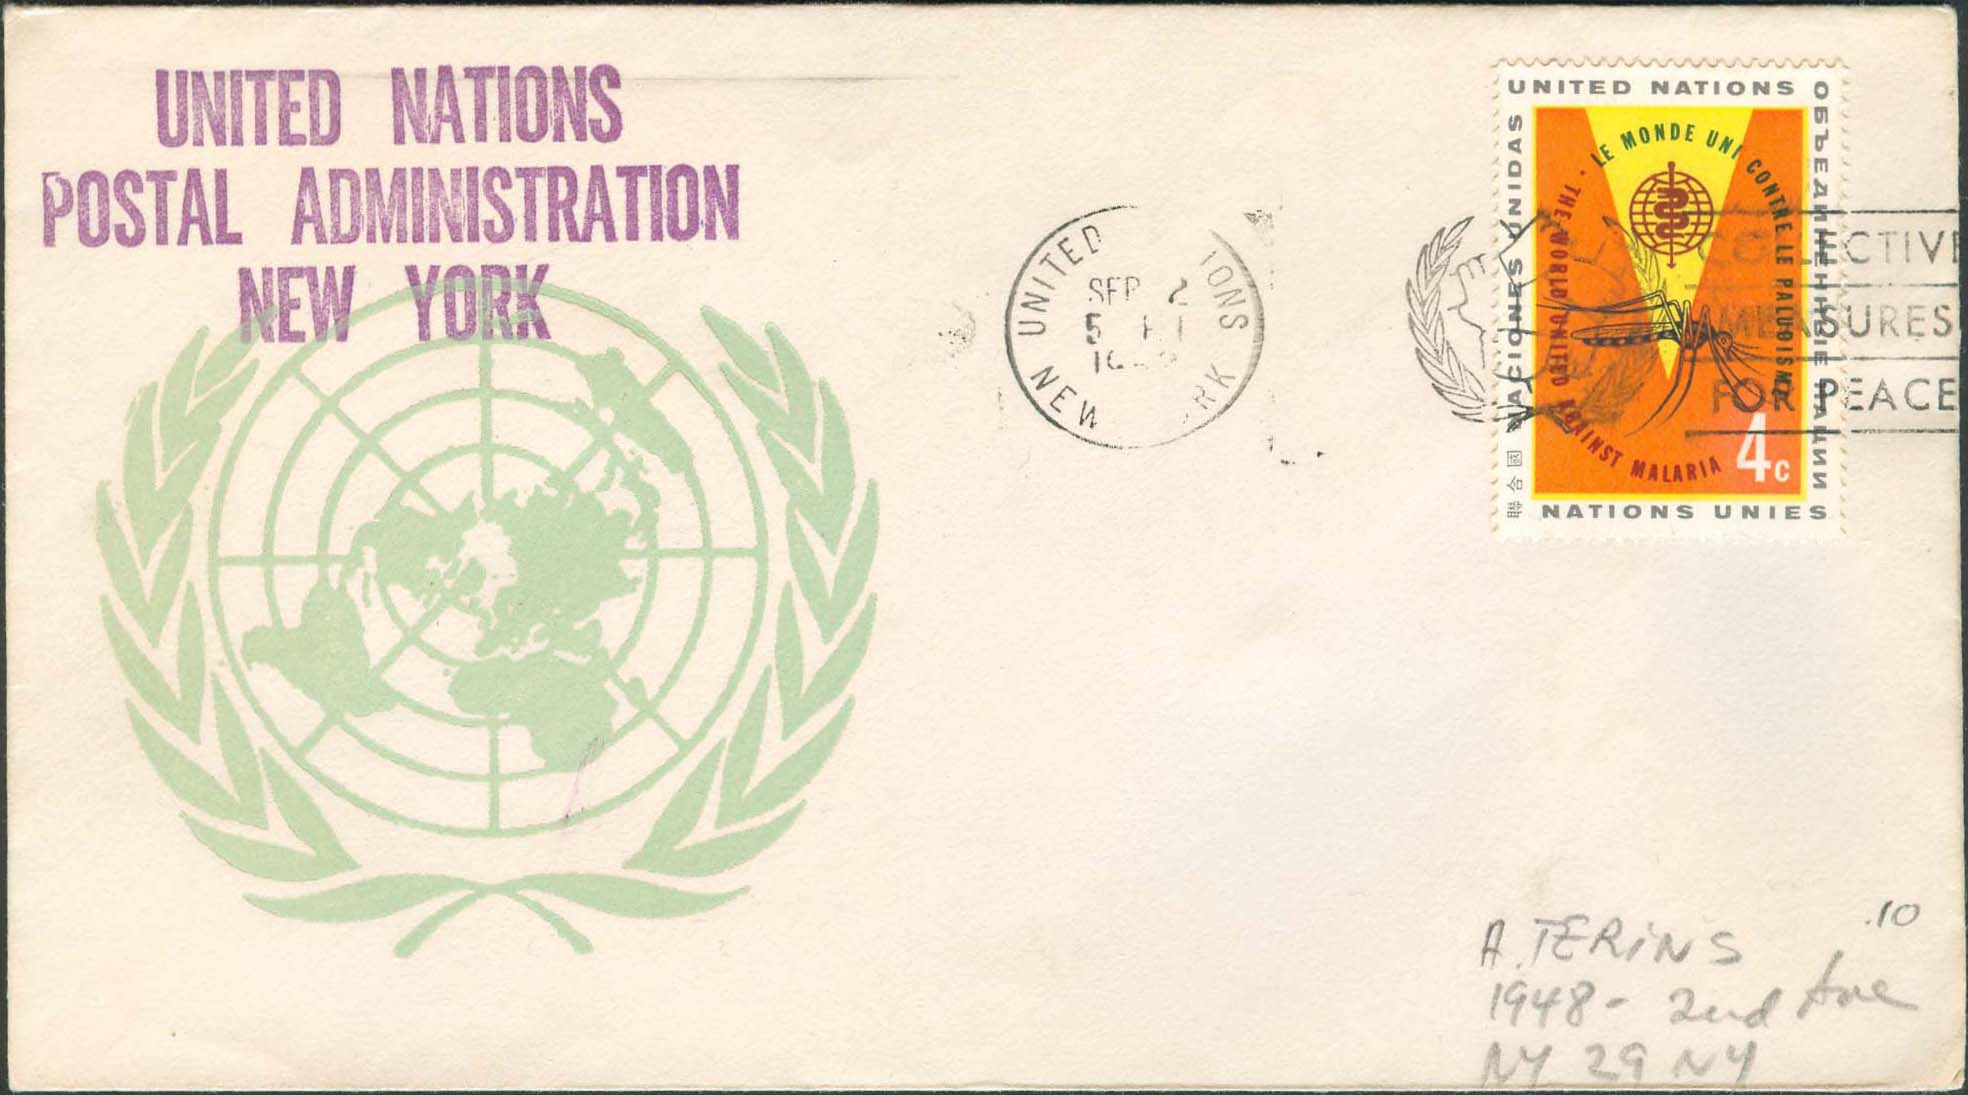 Scott 102 1st print - Sept 2, 1962 <br />Machine slogan cancel "Collective Measures for Peace"<br />UN Postal Administration rubber stamped return address